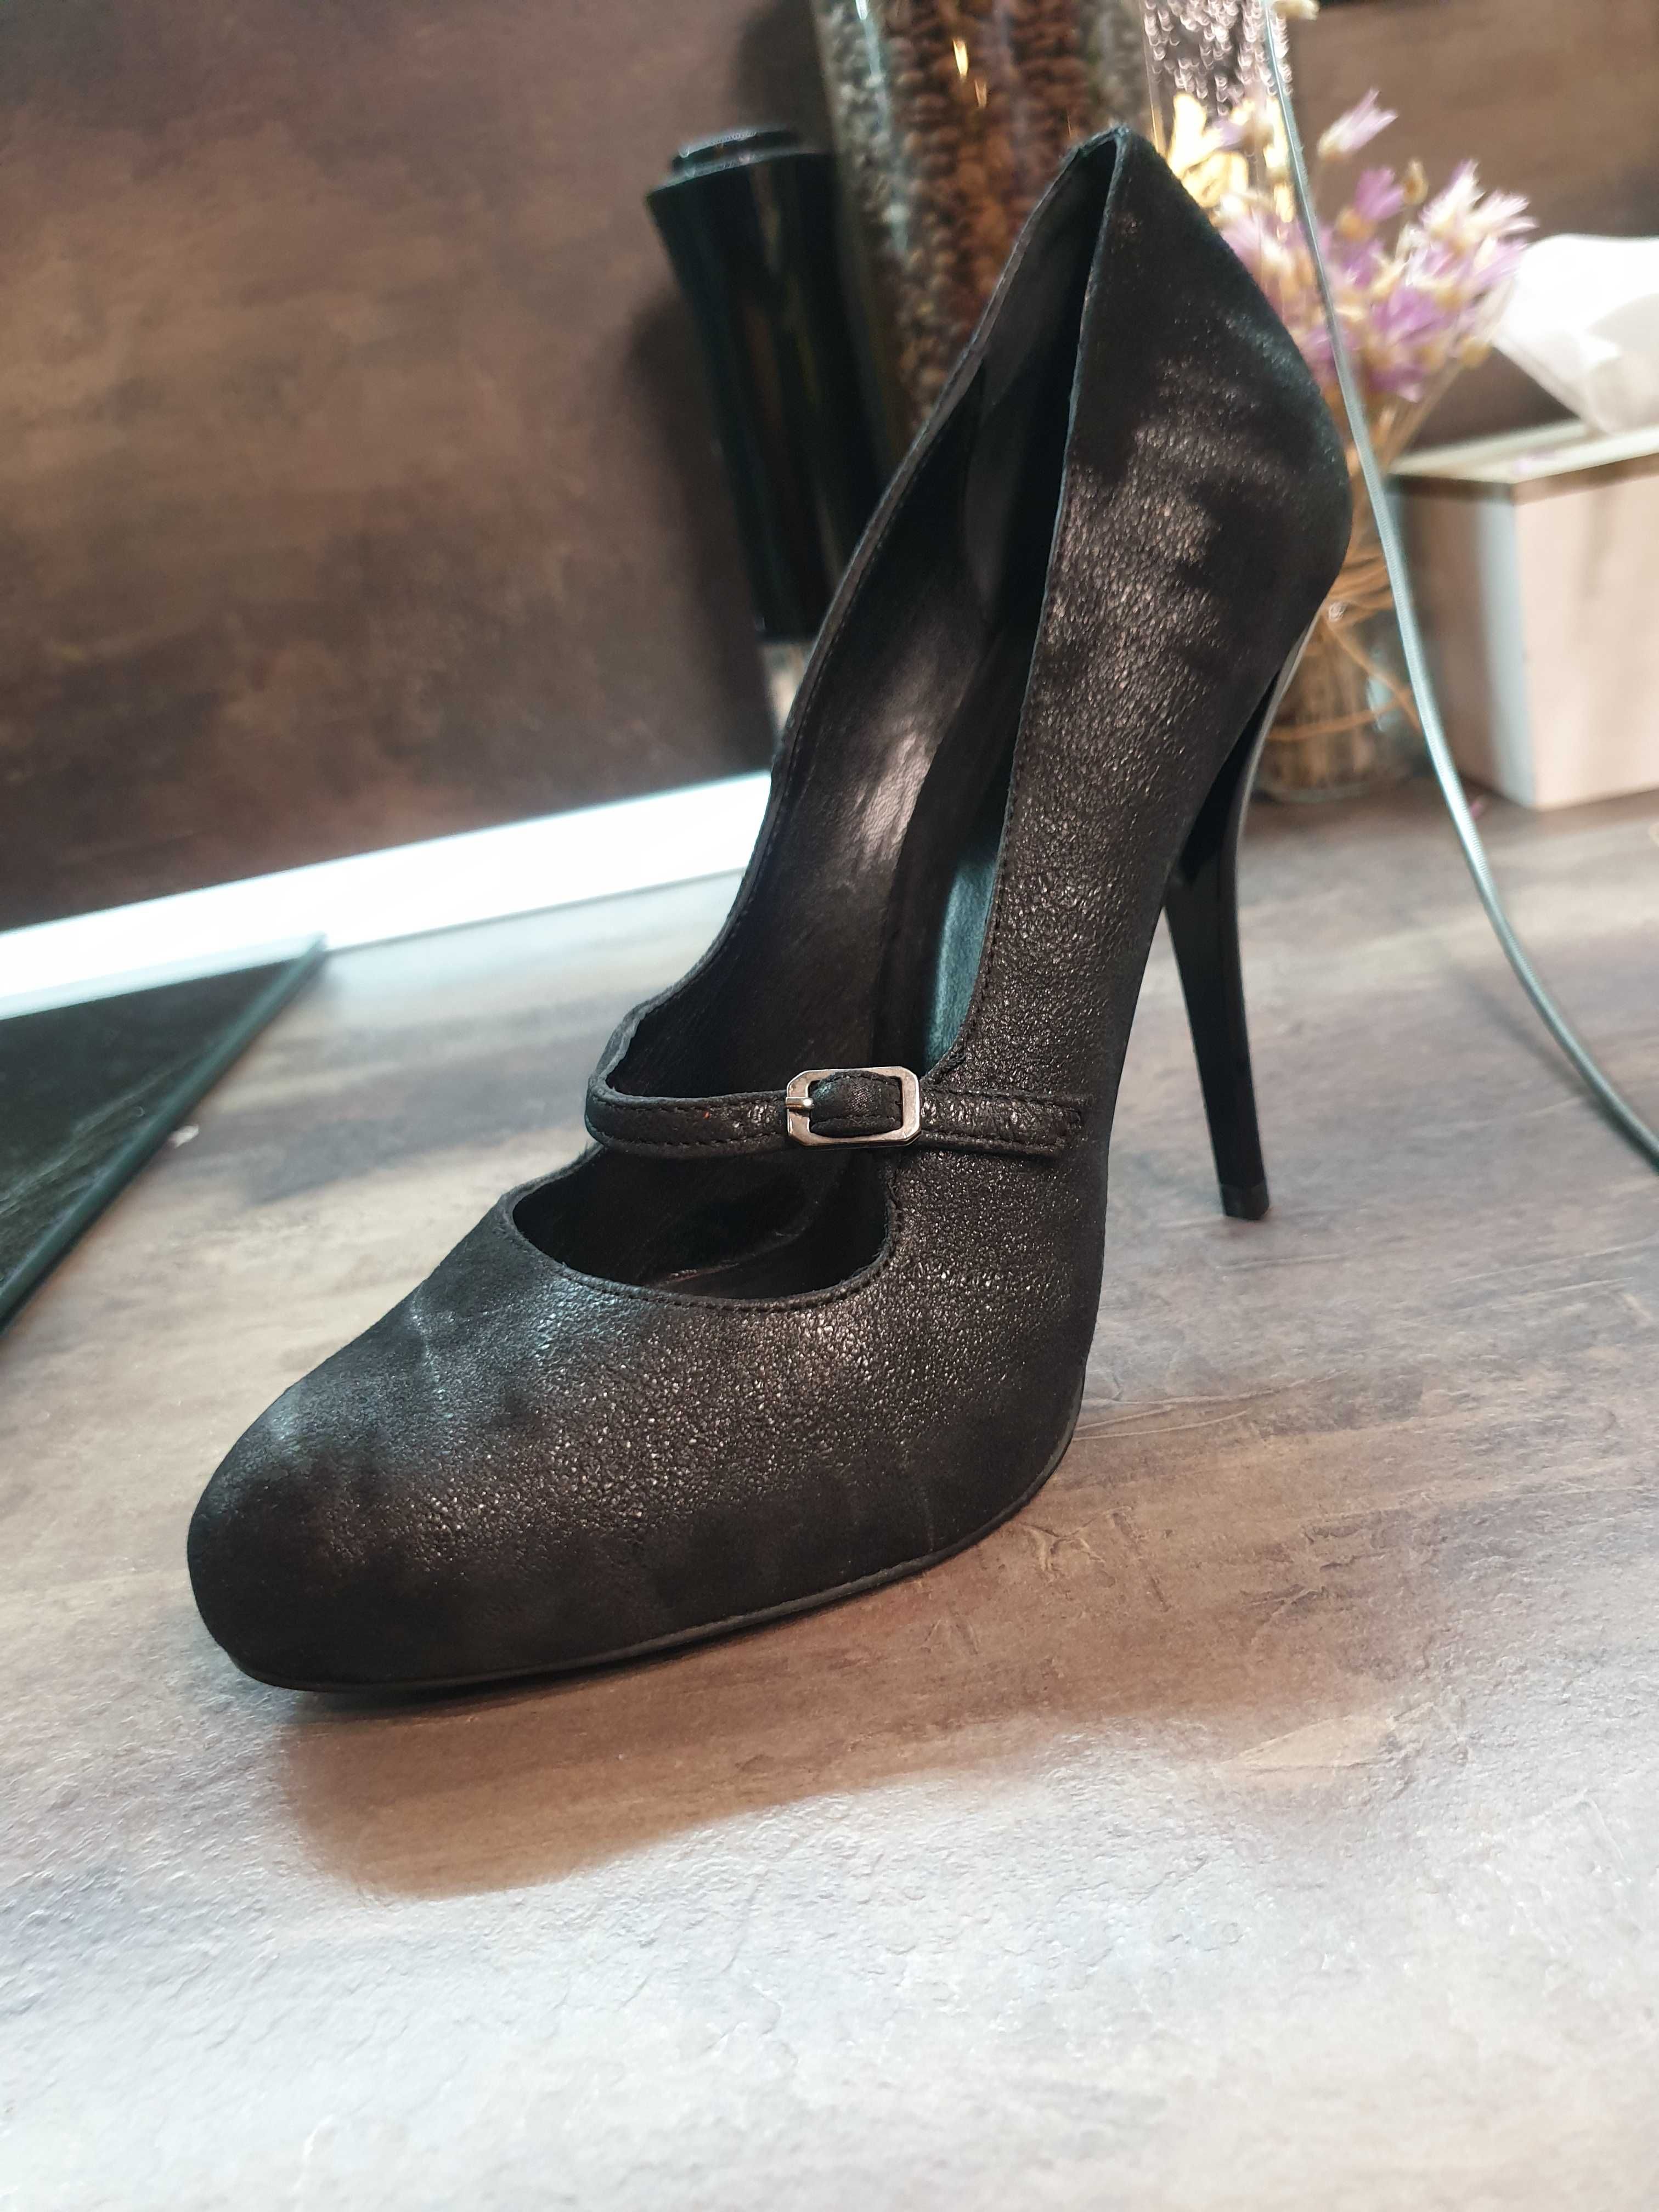 Дамски обувки Dario Bruni - естествена кожа - висок ток - нови